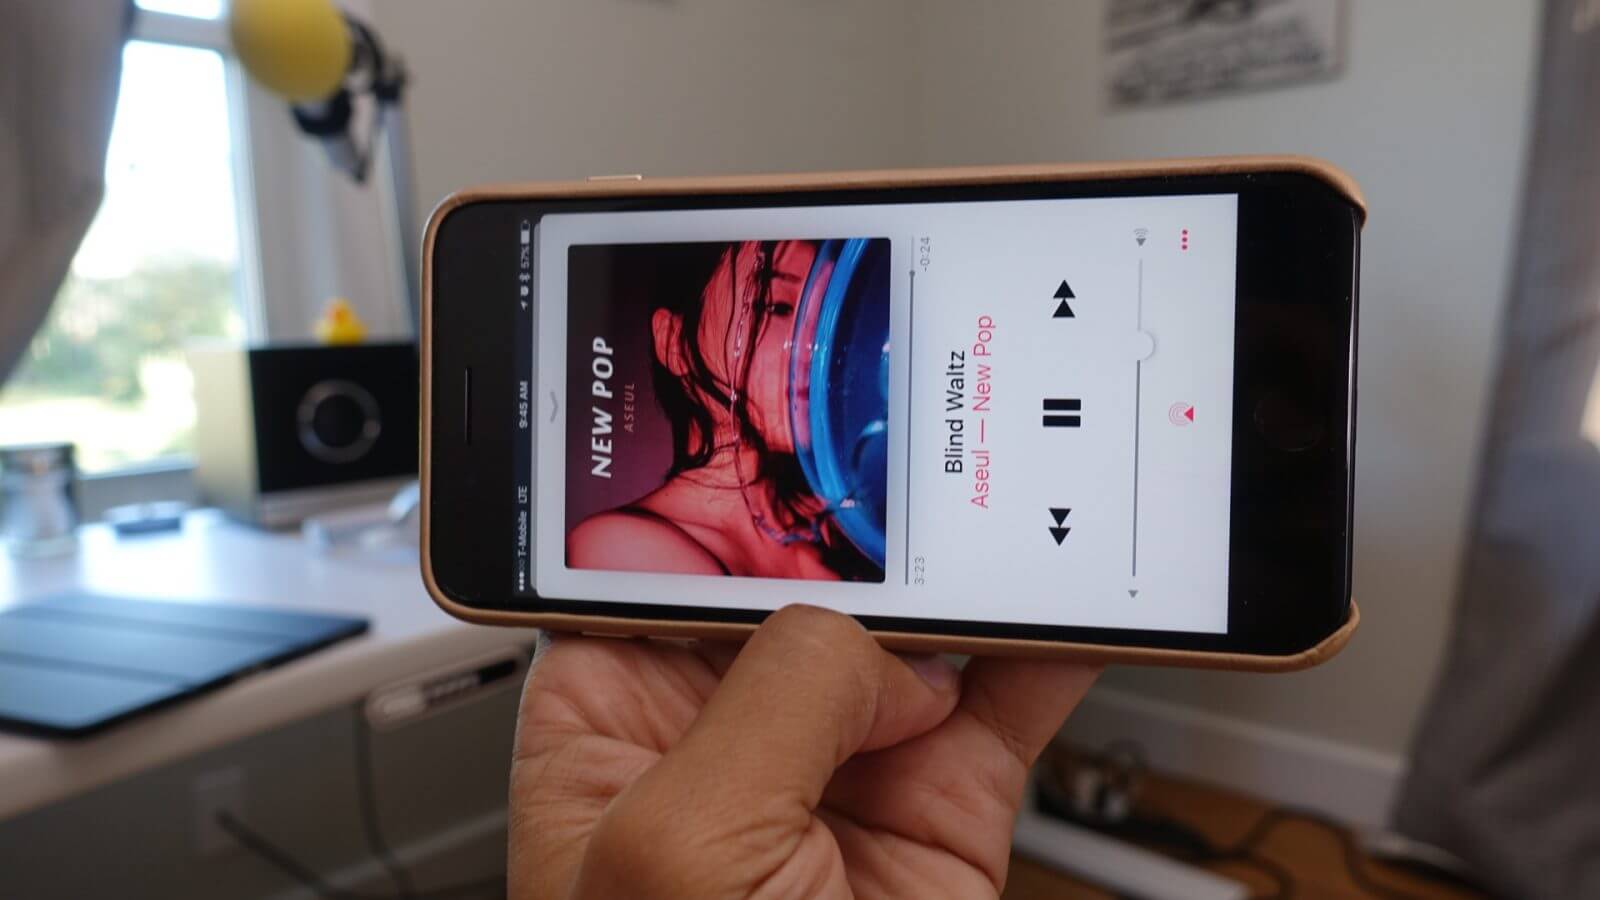 music app landscape iphone 7 stereo sound